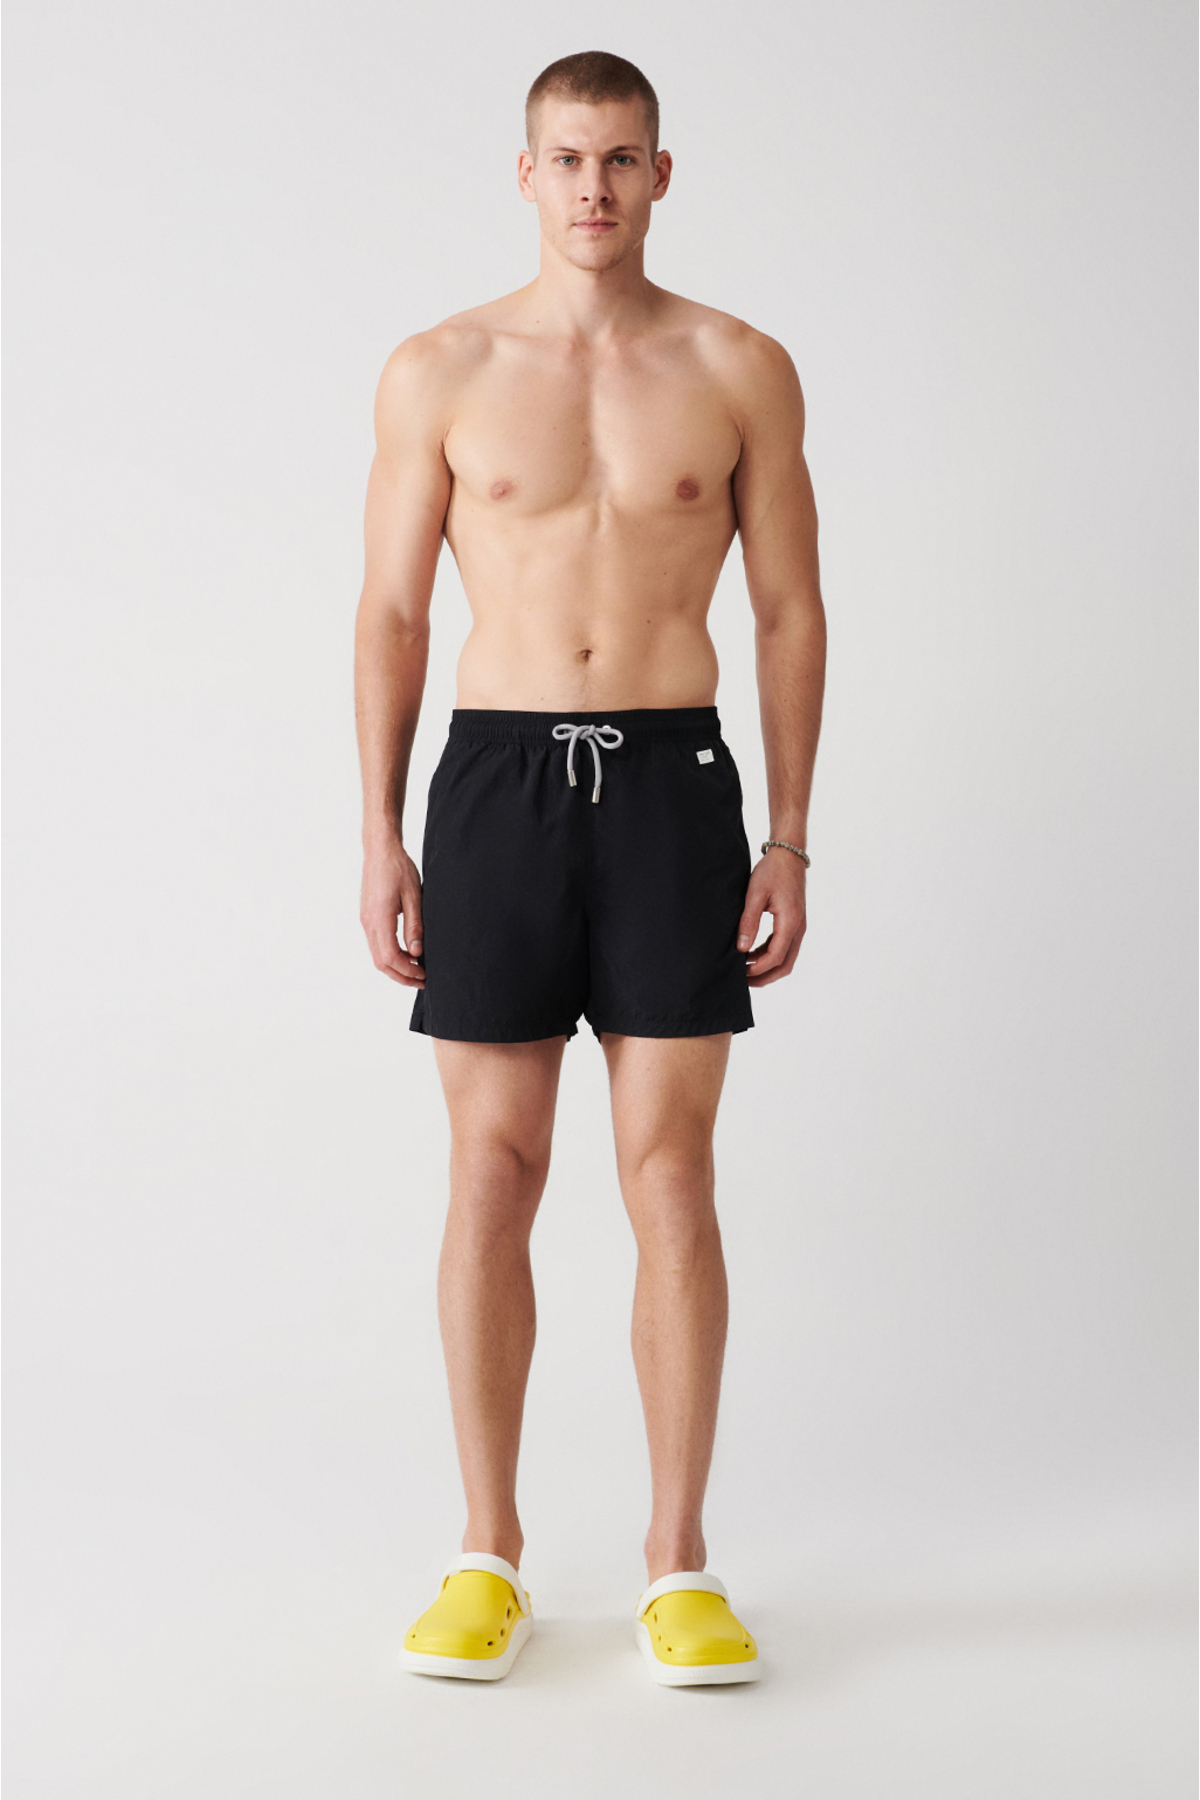 Avva Men's Black Quick Dry Standard Size Plain Special Box Swimsuit Marine Shorts